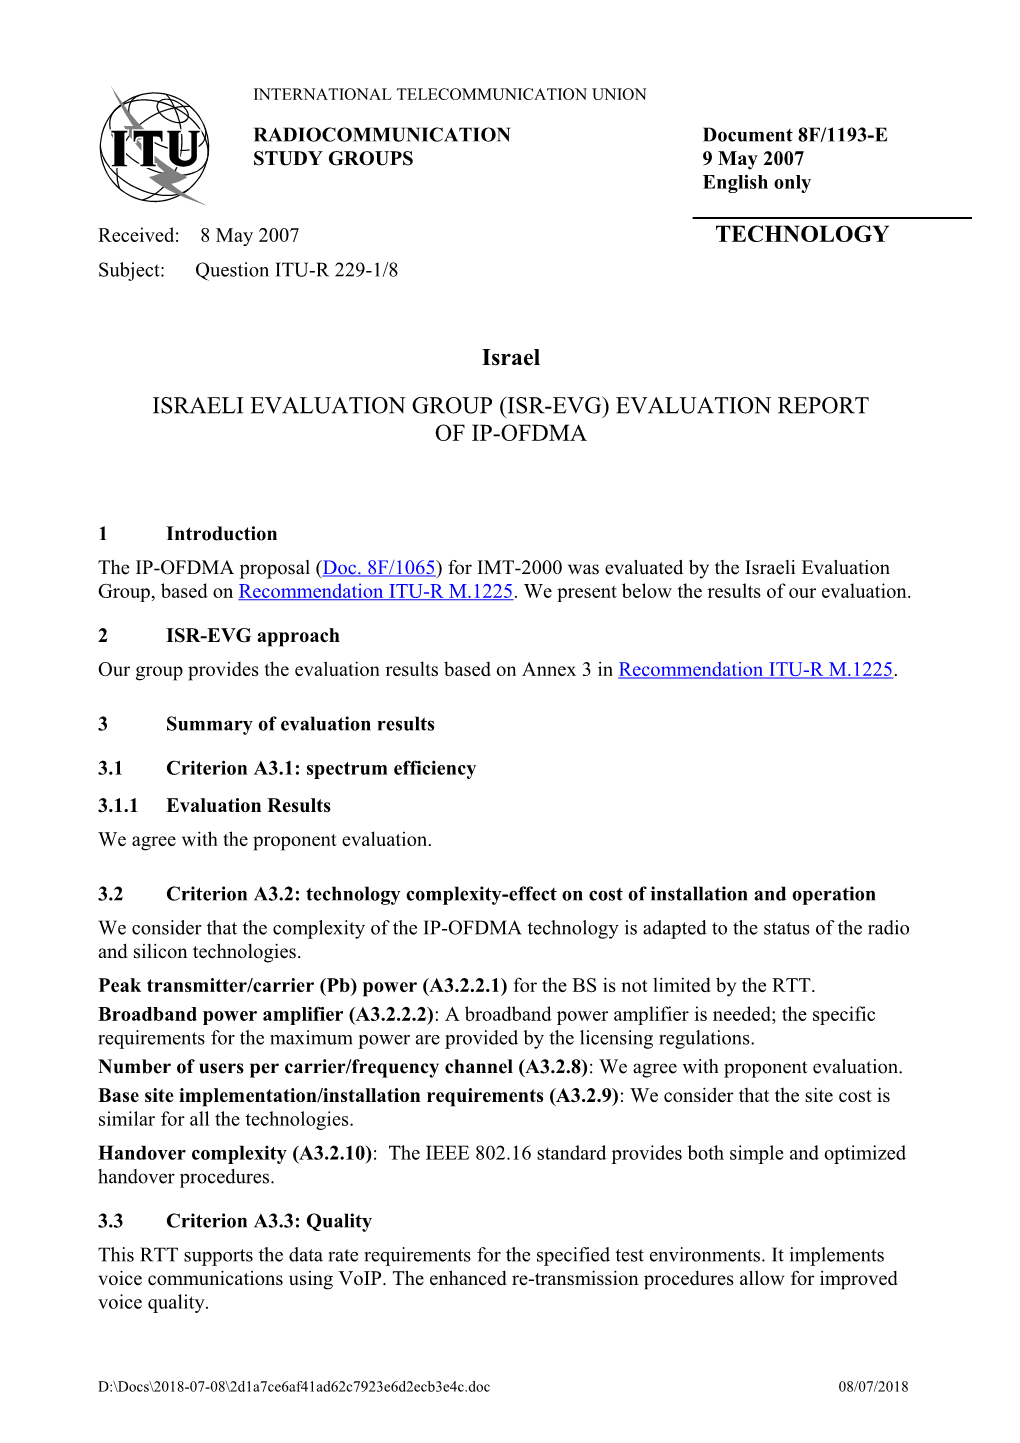 Subject: Question ITU-R 229-1/8